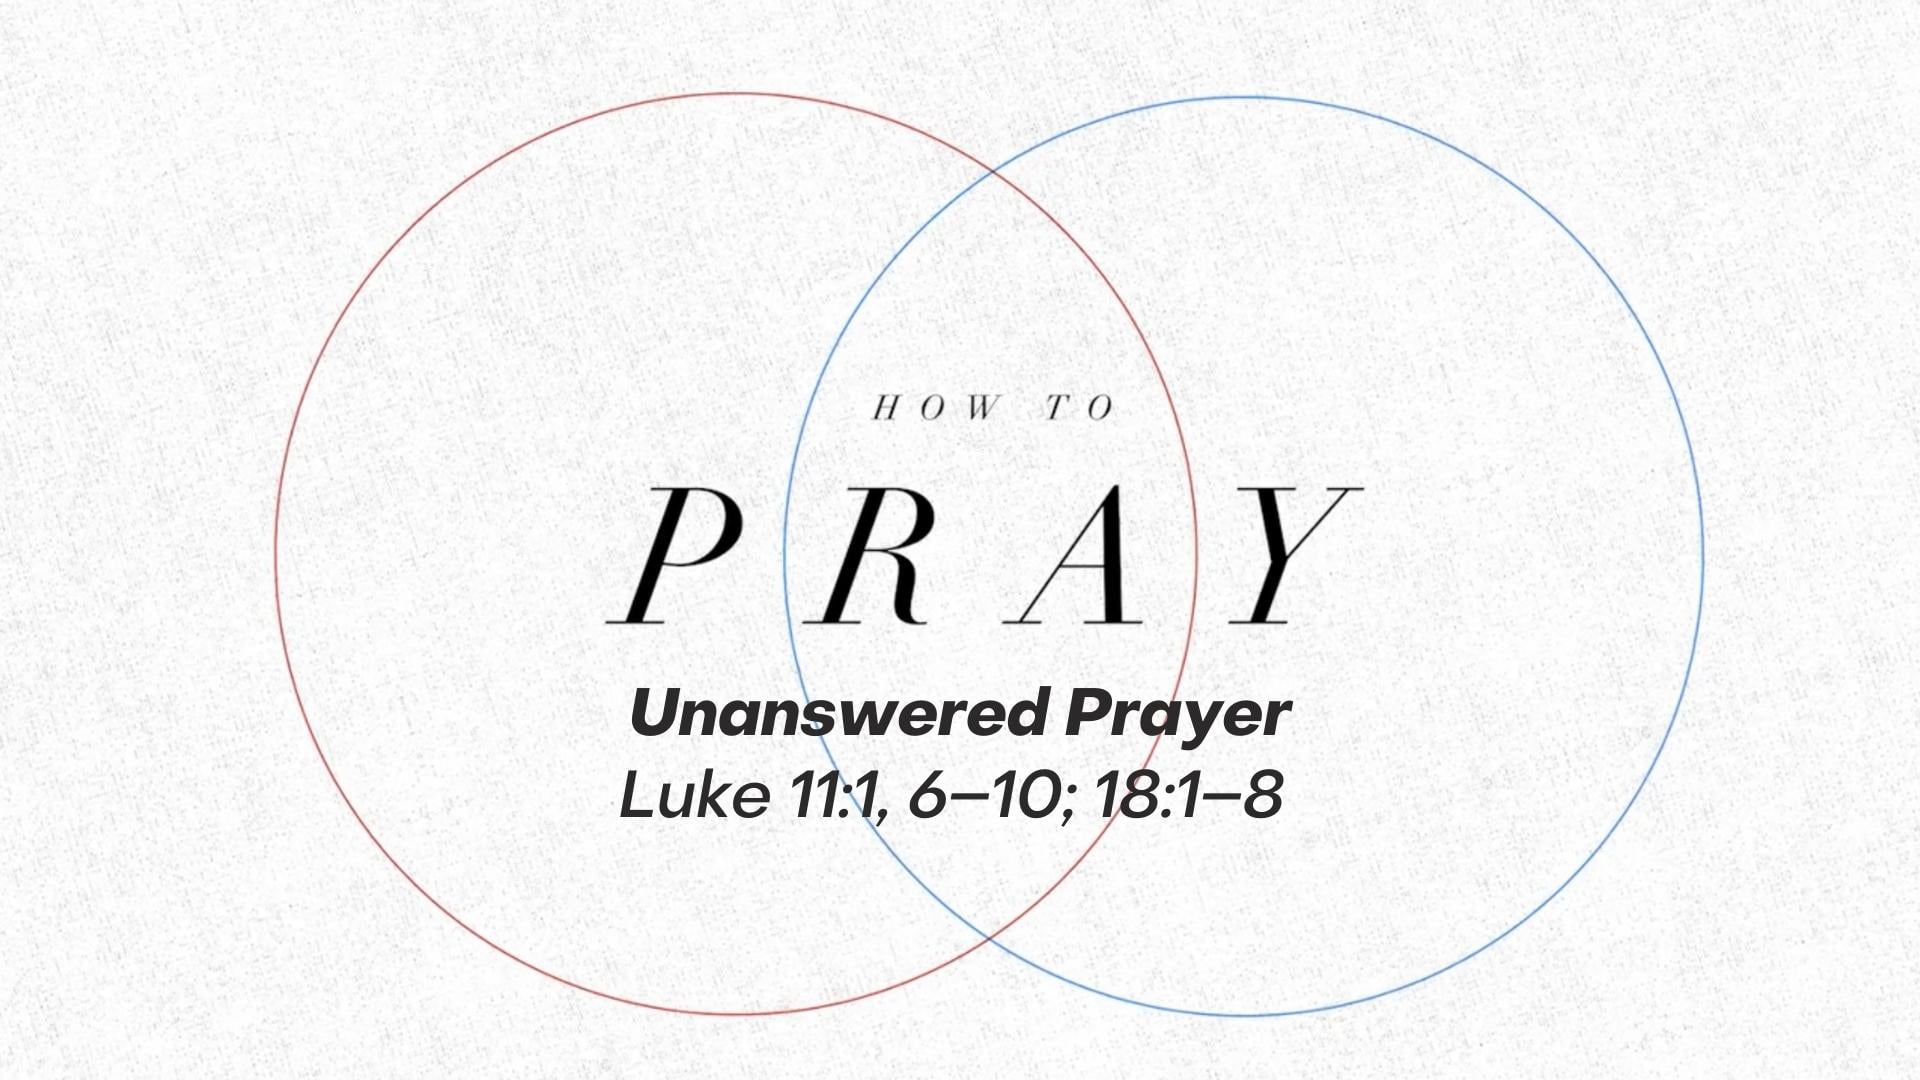 Unanswered Prayer - November 28, 2021